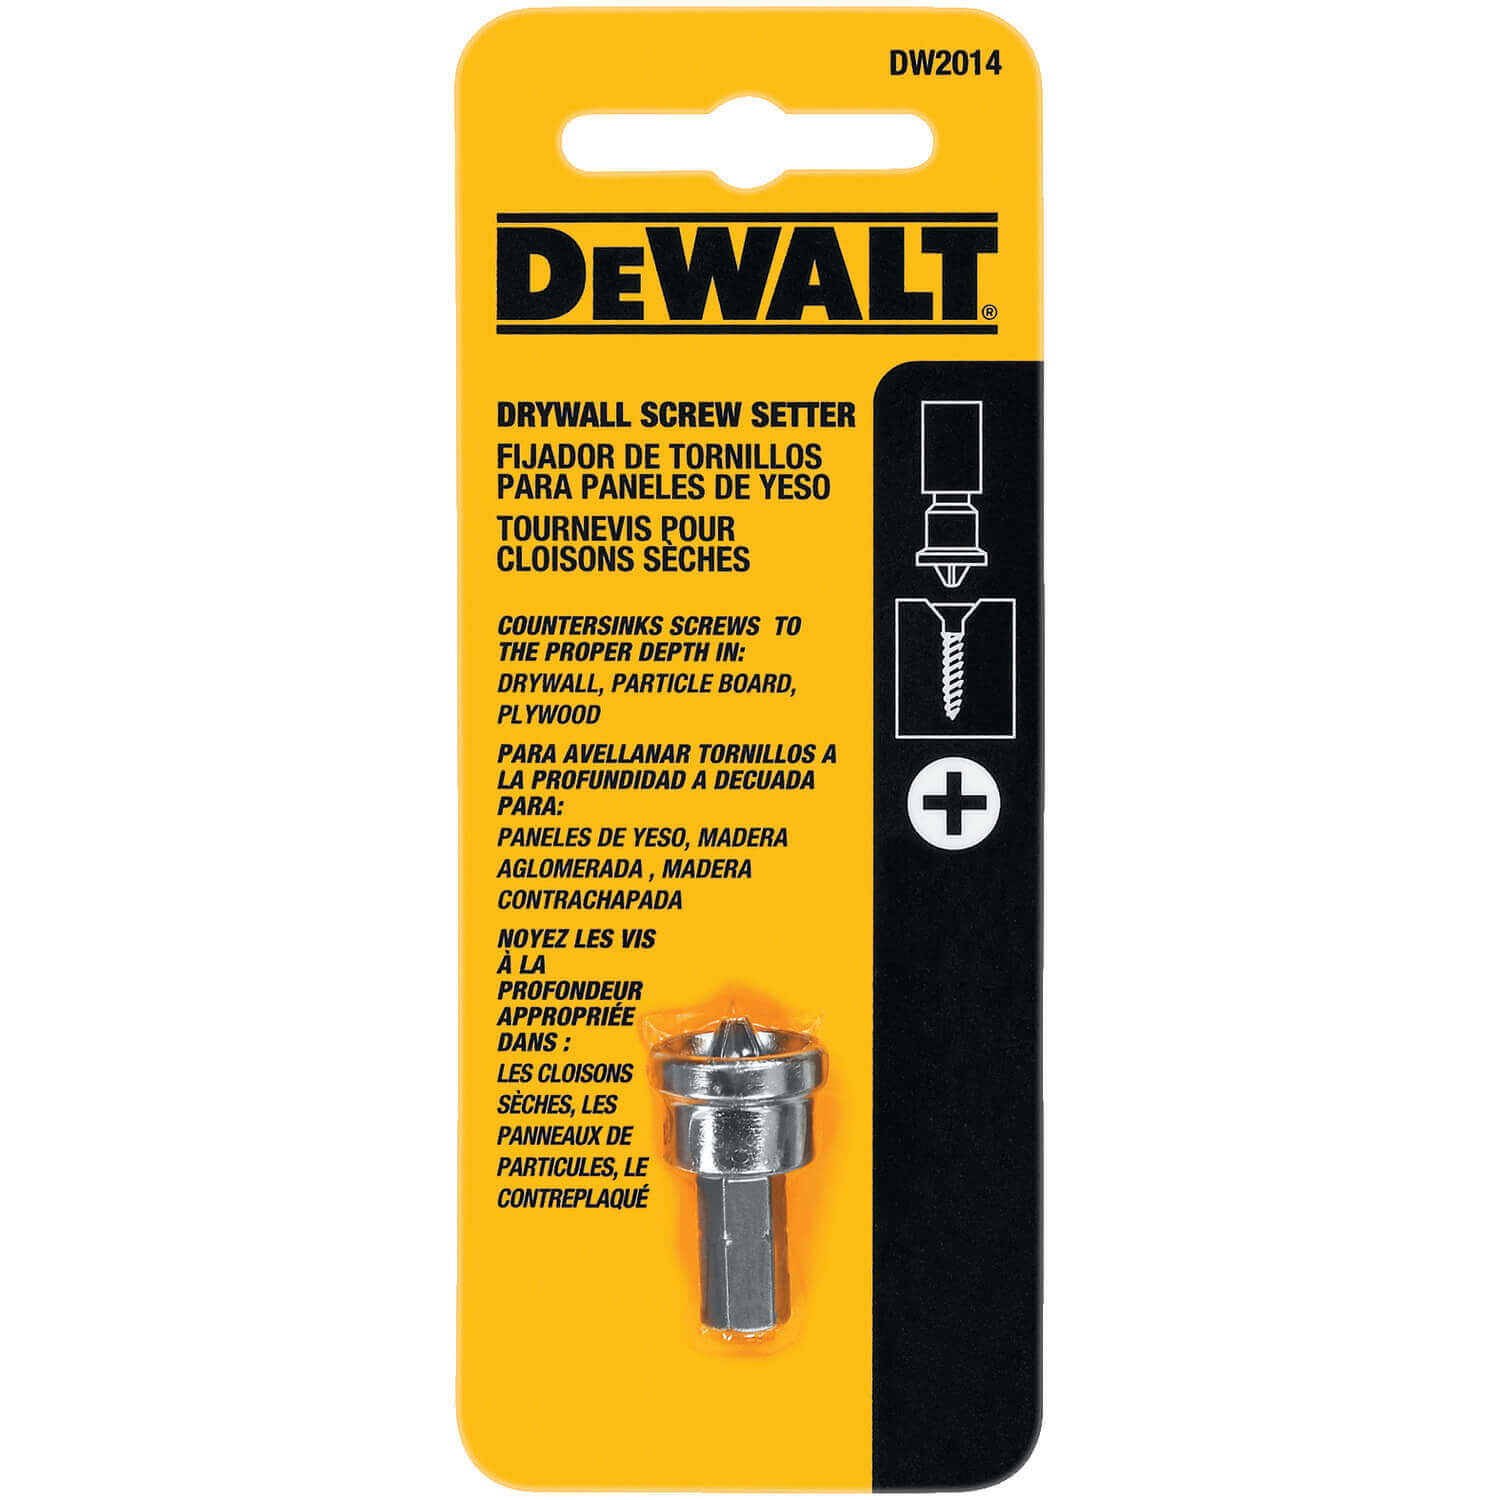 DEWALT DW2014 Drywall Screw Setter Bit Tip - wise-line-tools